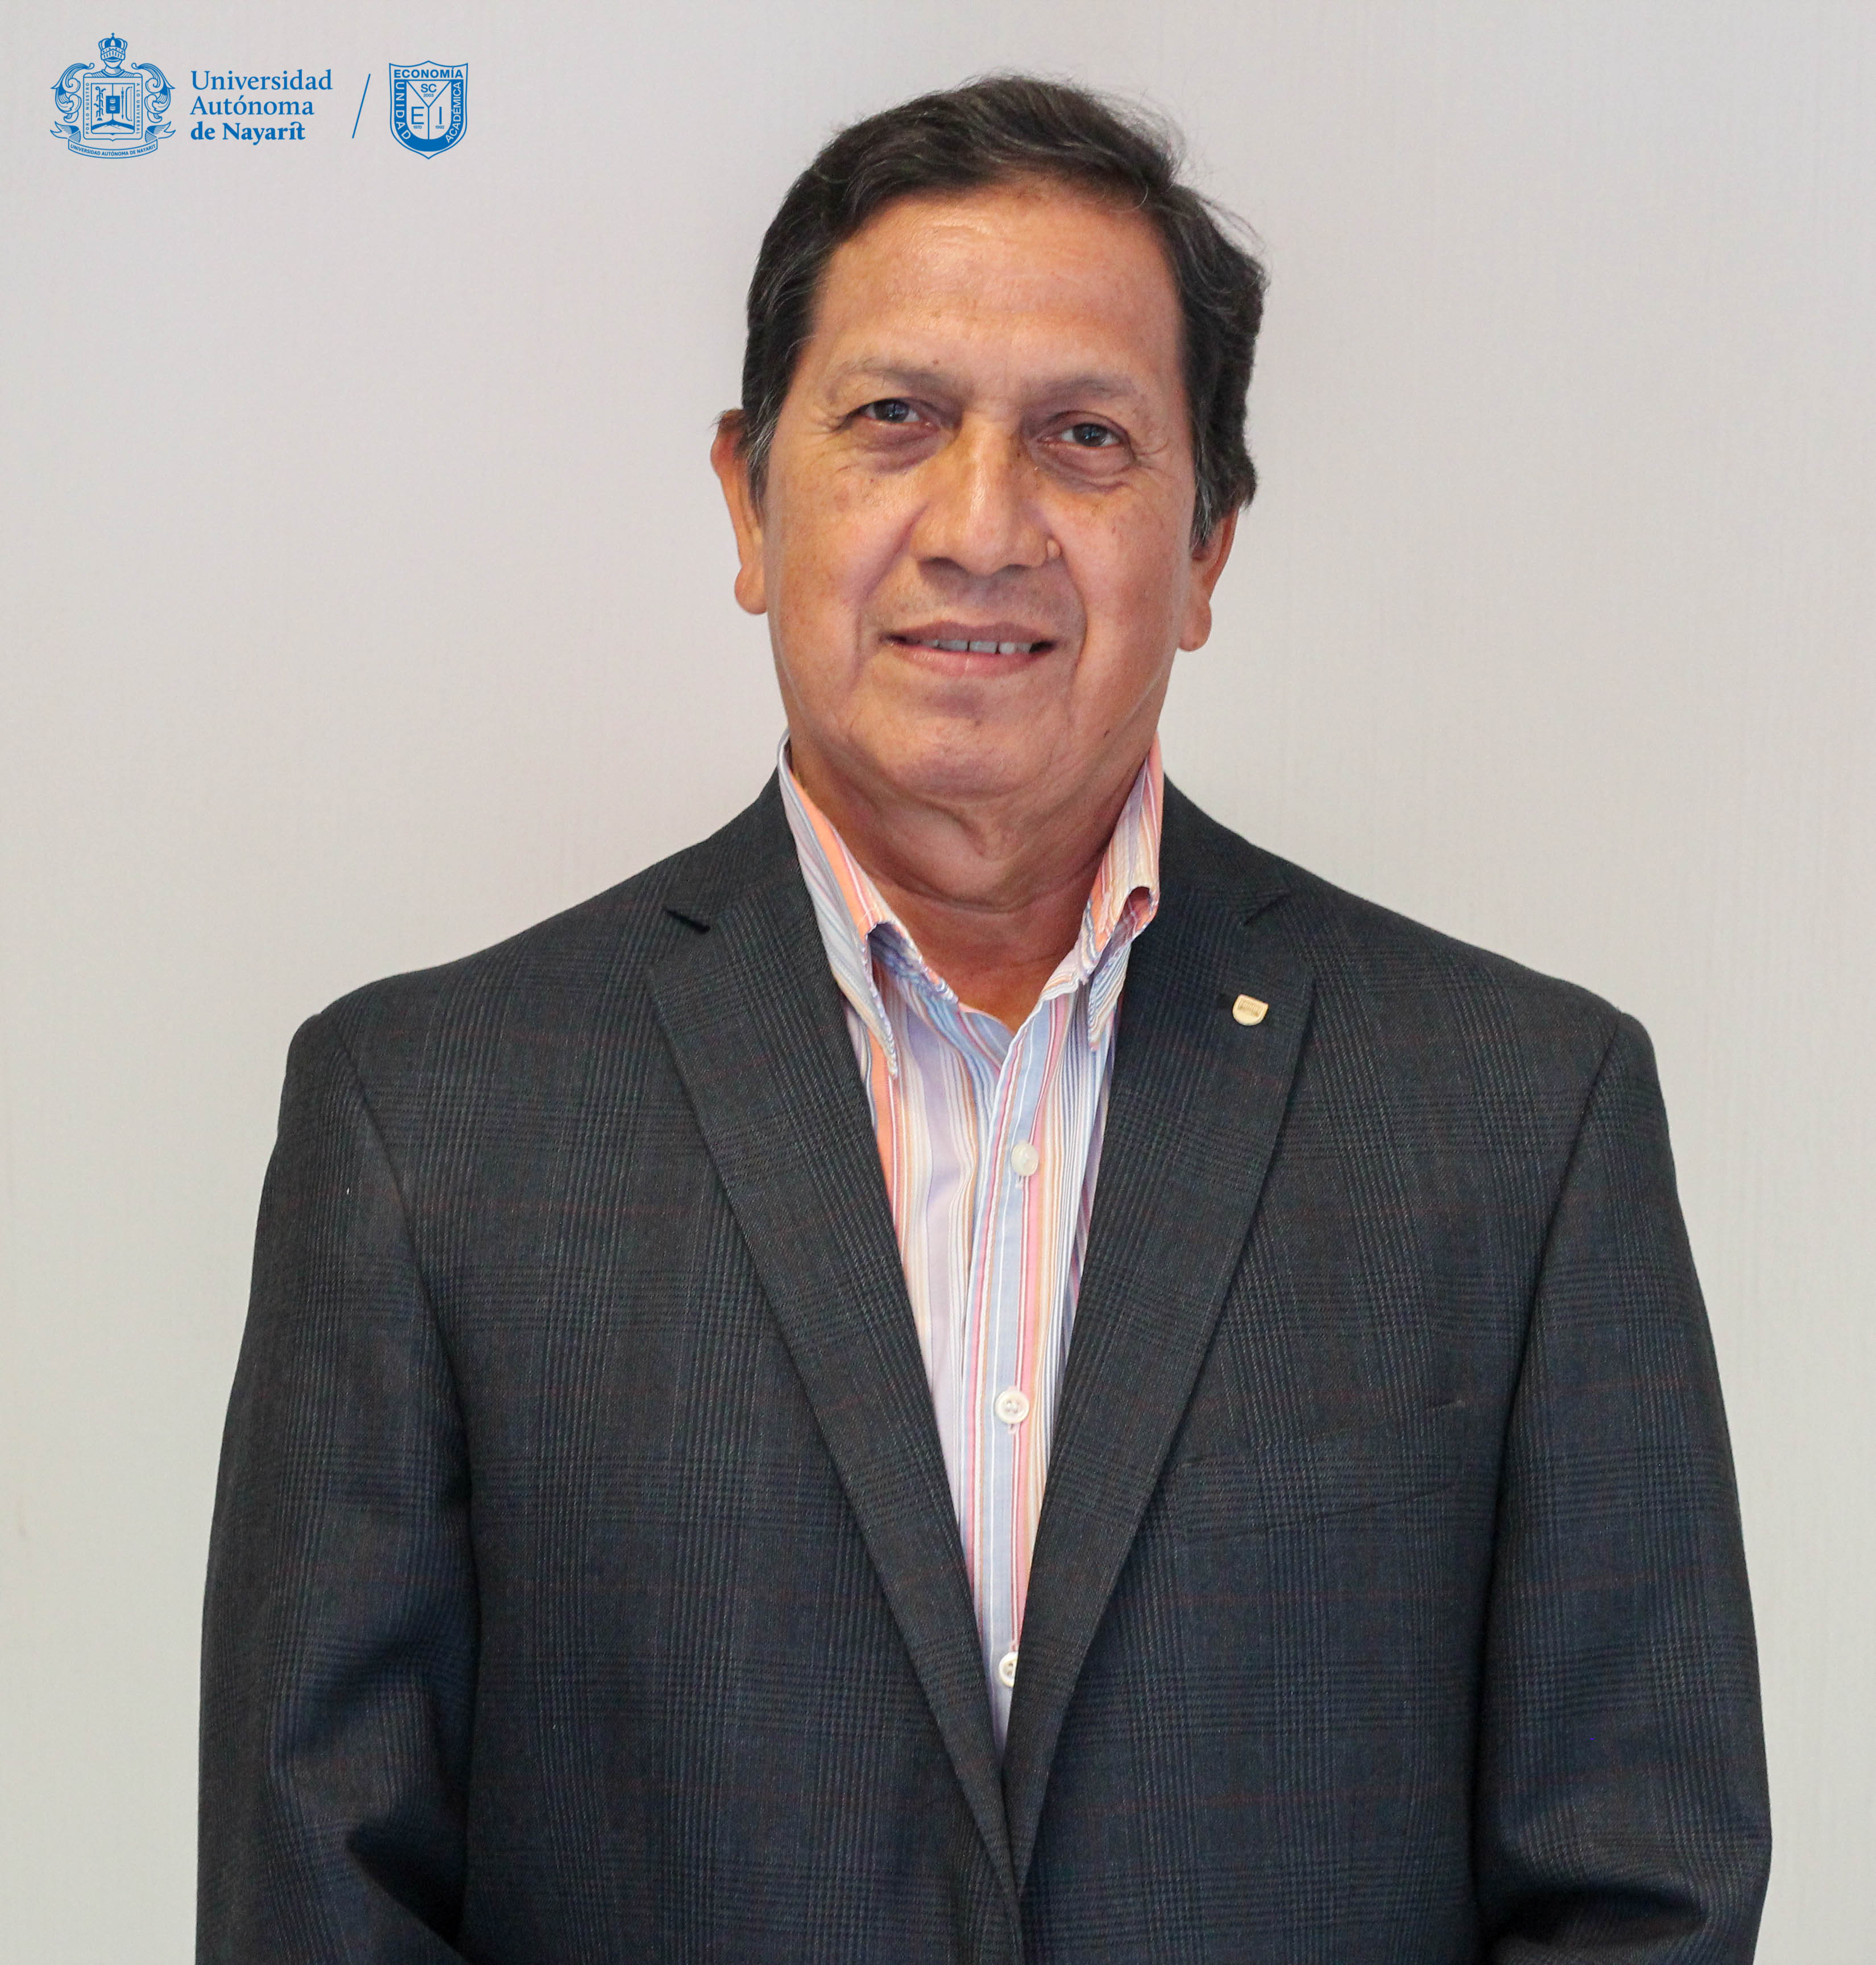 Dr. Edel Soto Ceja